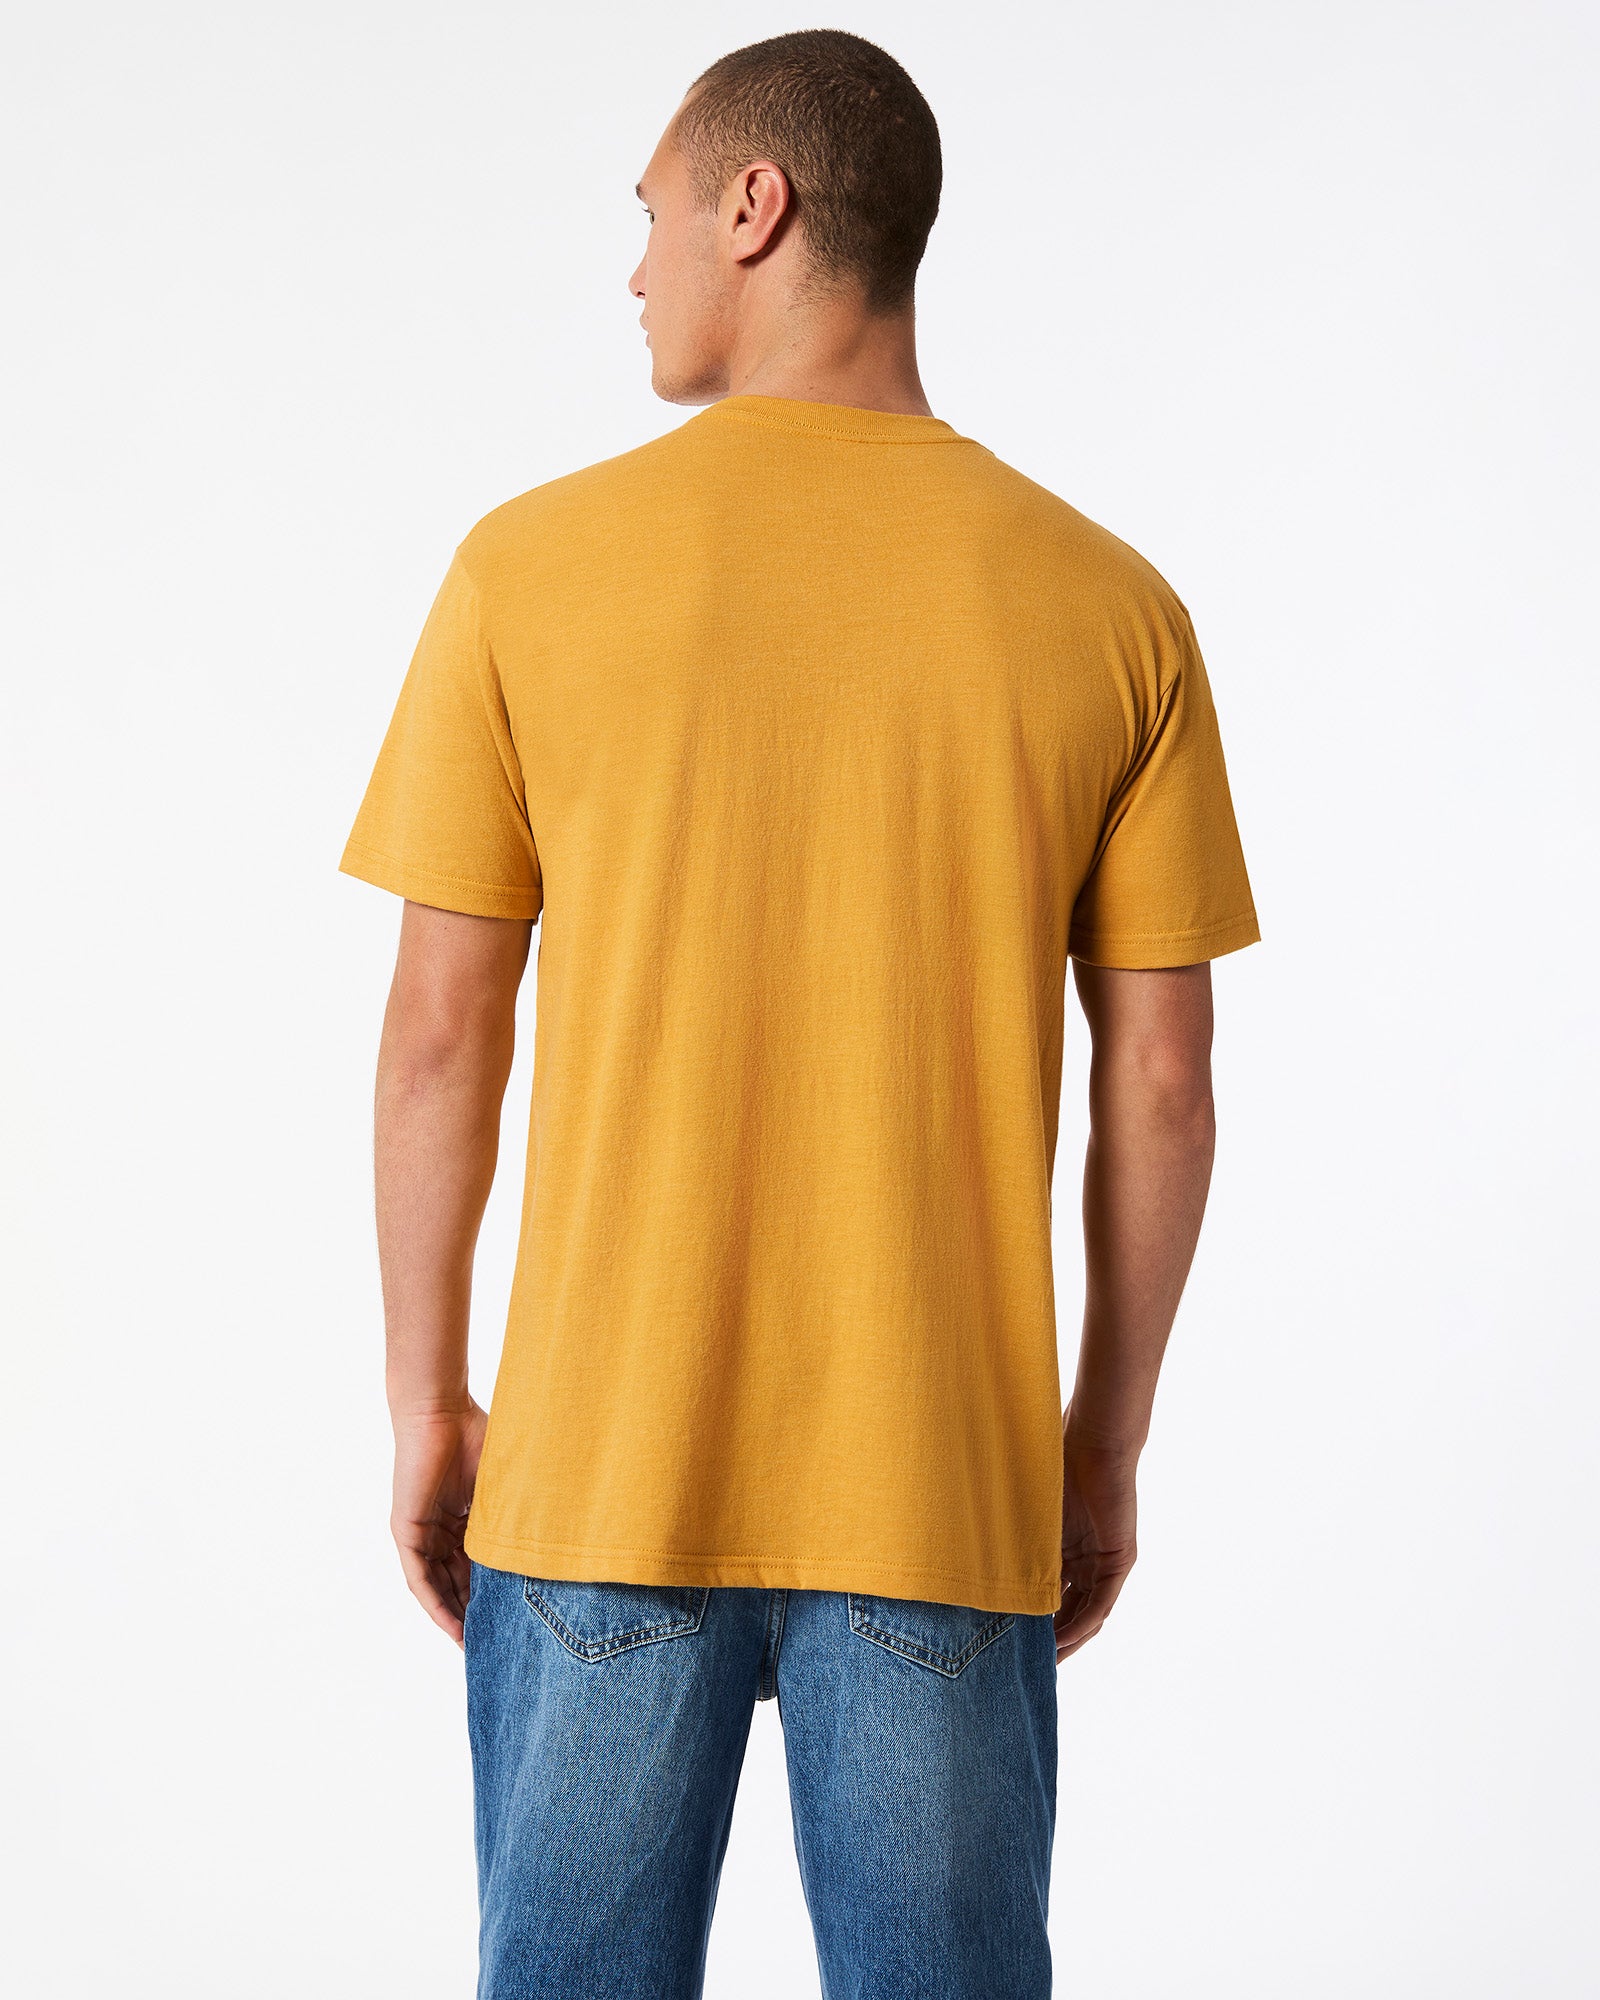 CVC Unisex Short Sleeve T-Shirt - Heather Mustard